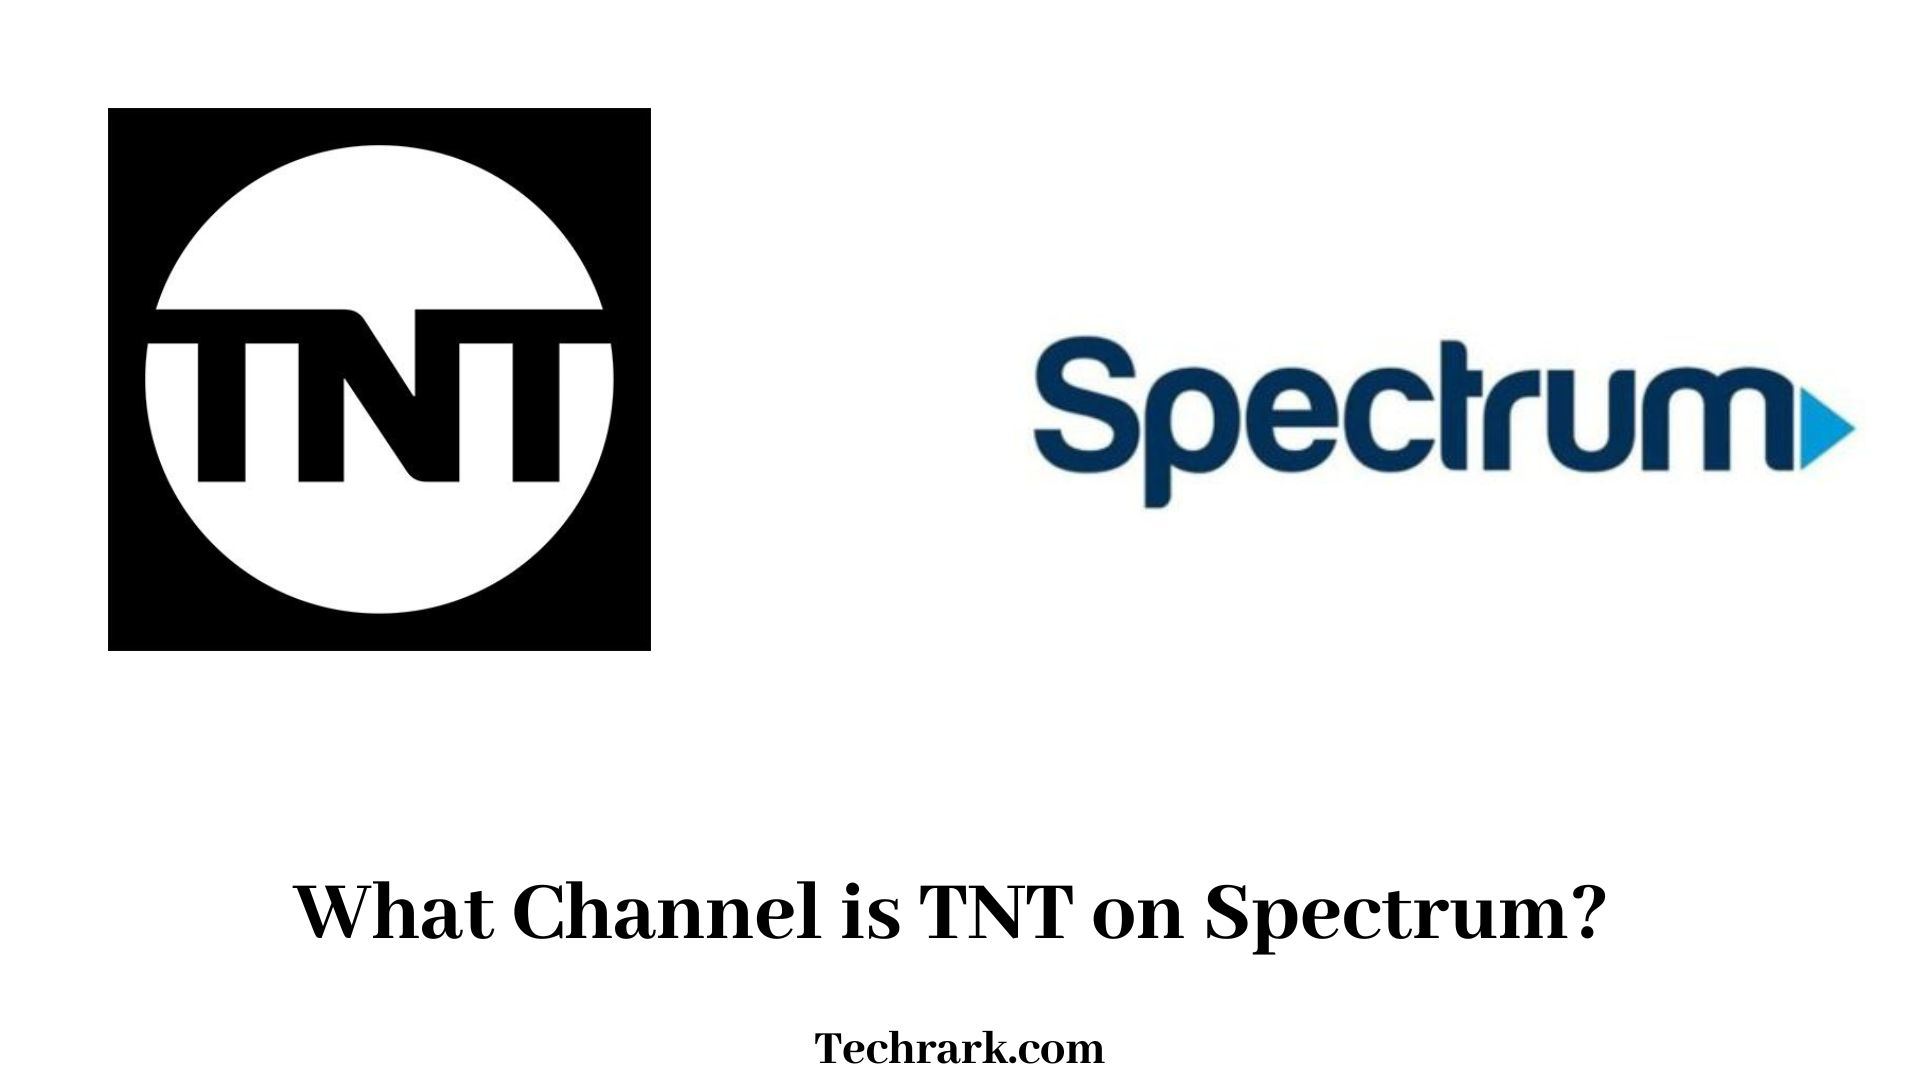 What Channel is TNT on Spectrum